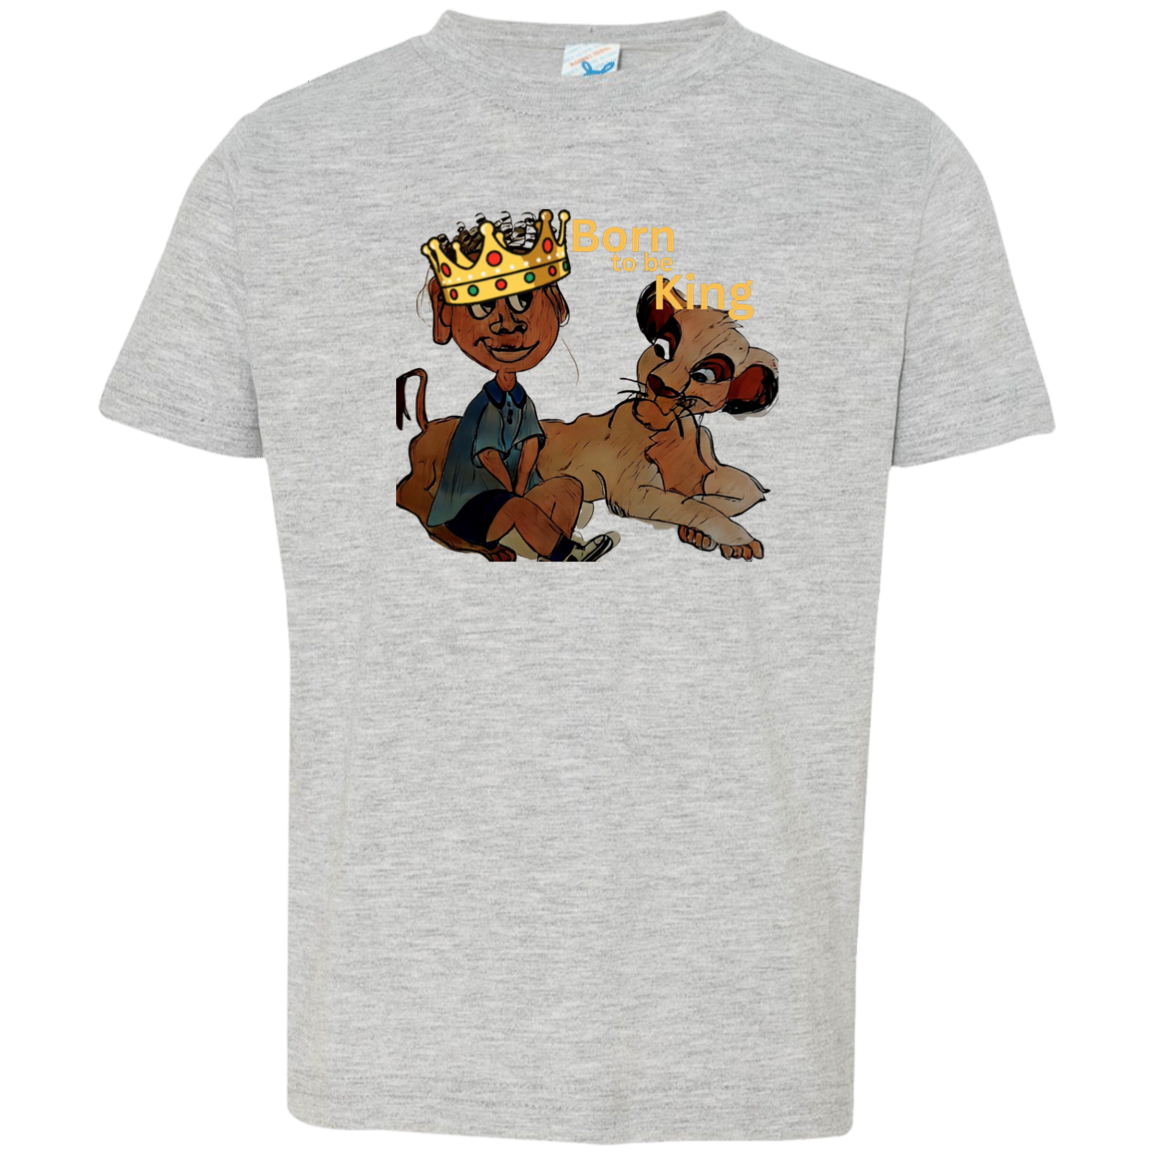 Born to be King Toddler Jersey T-Shirt